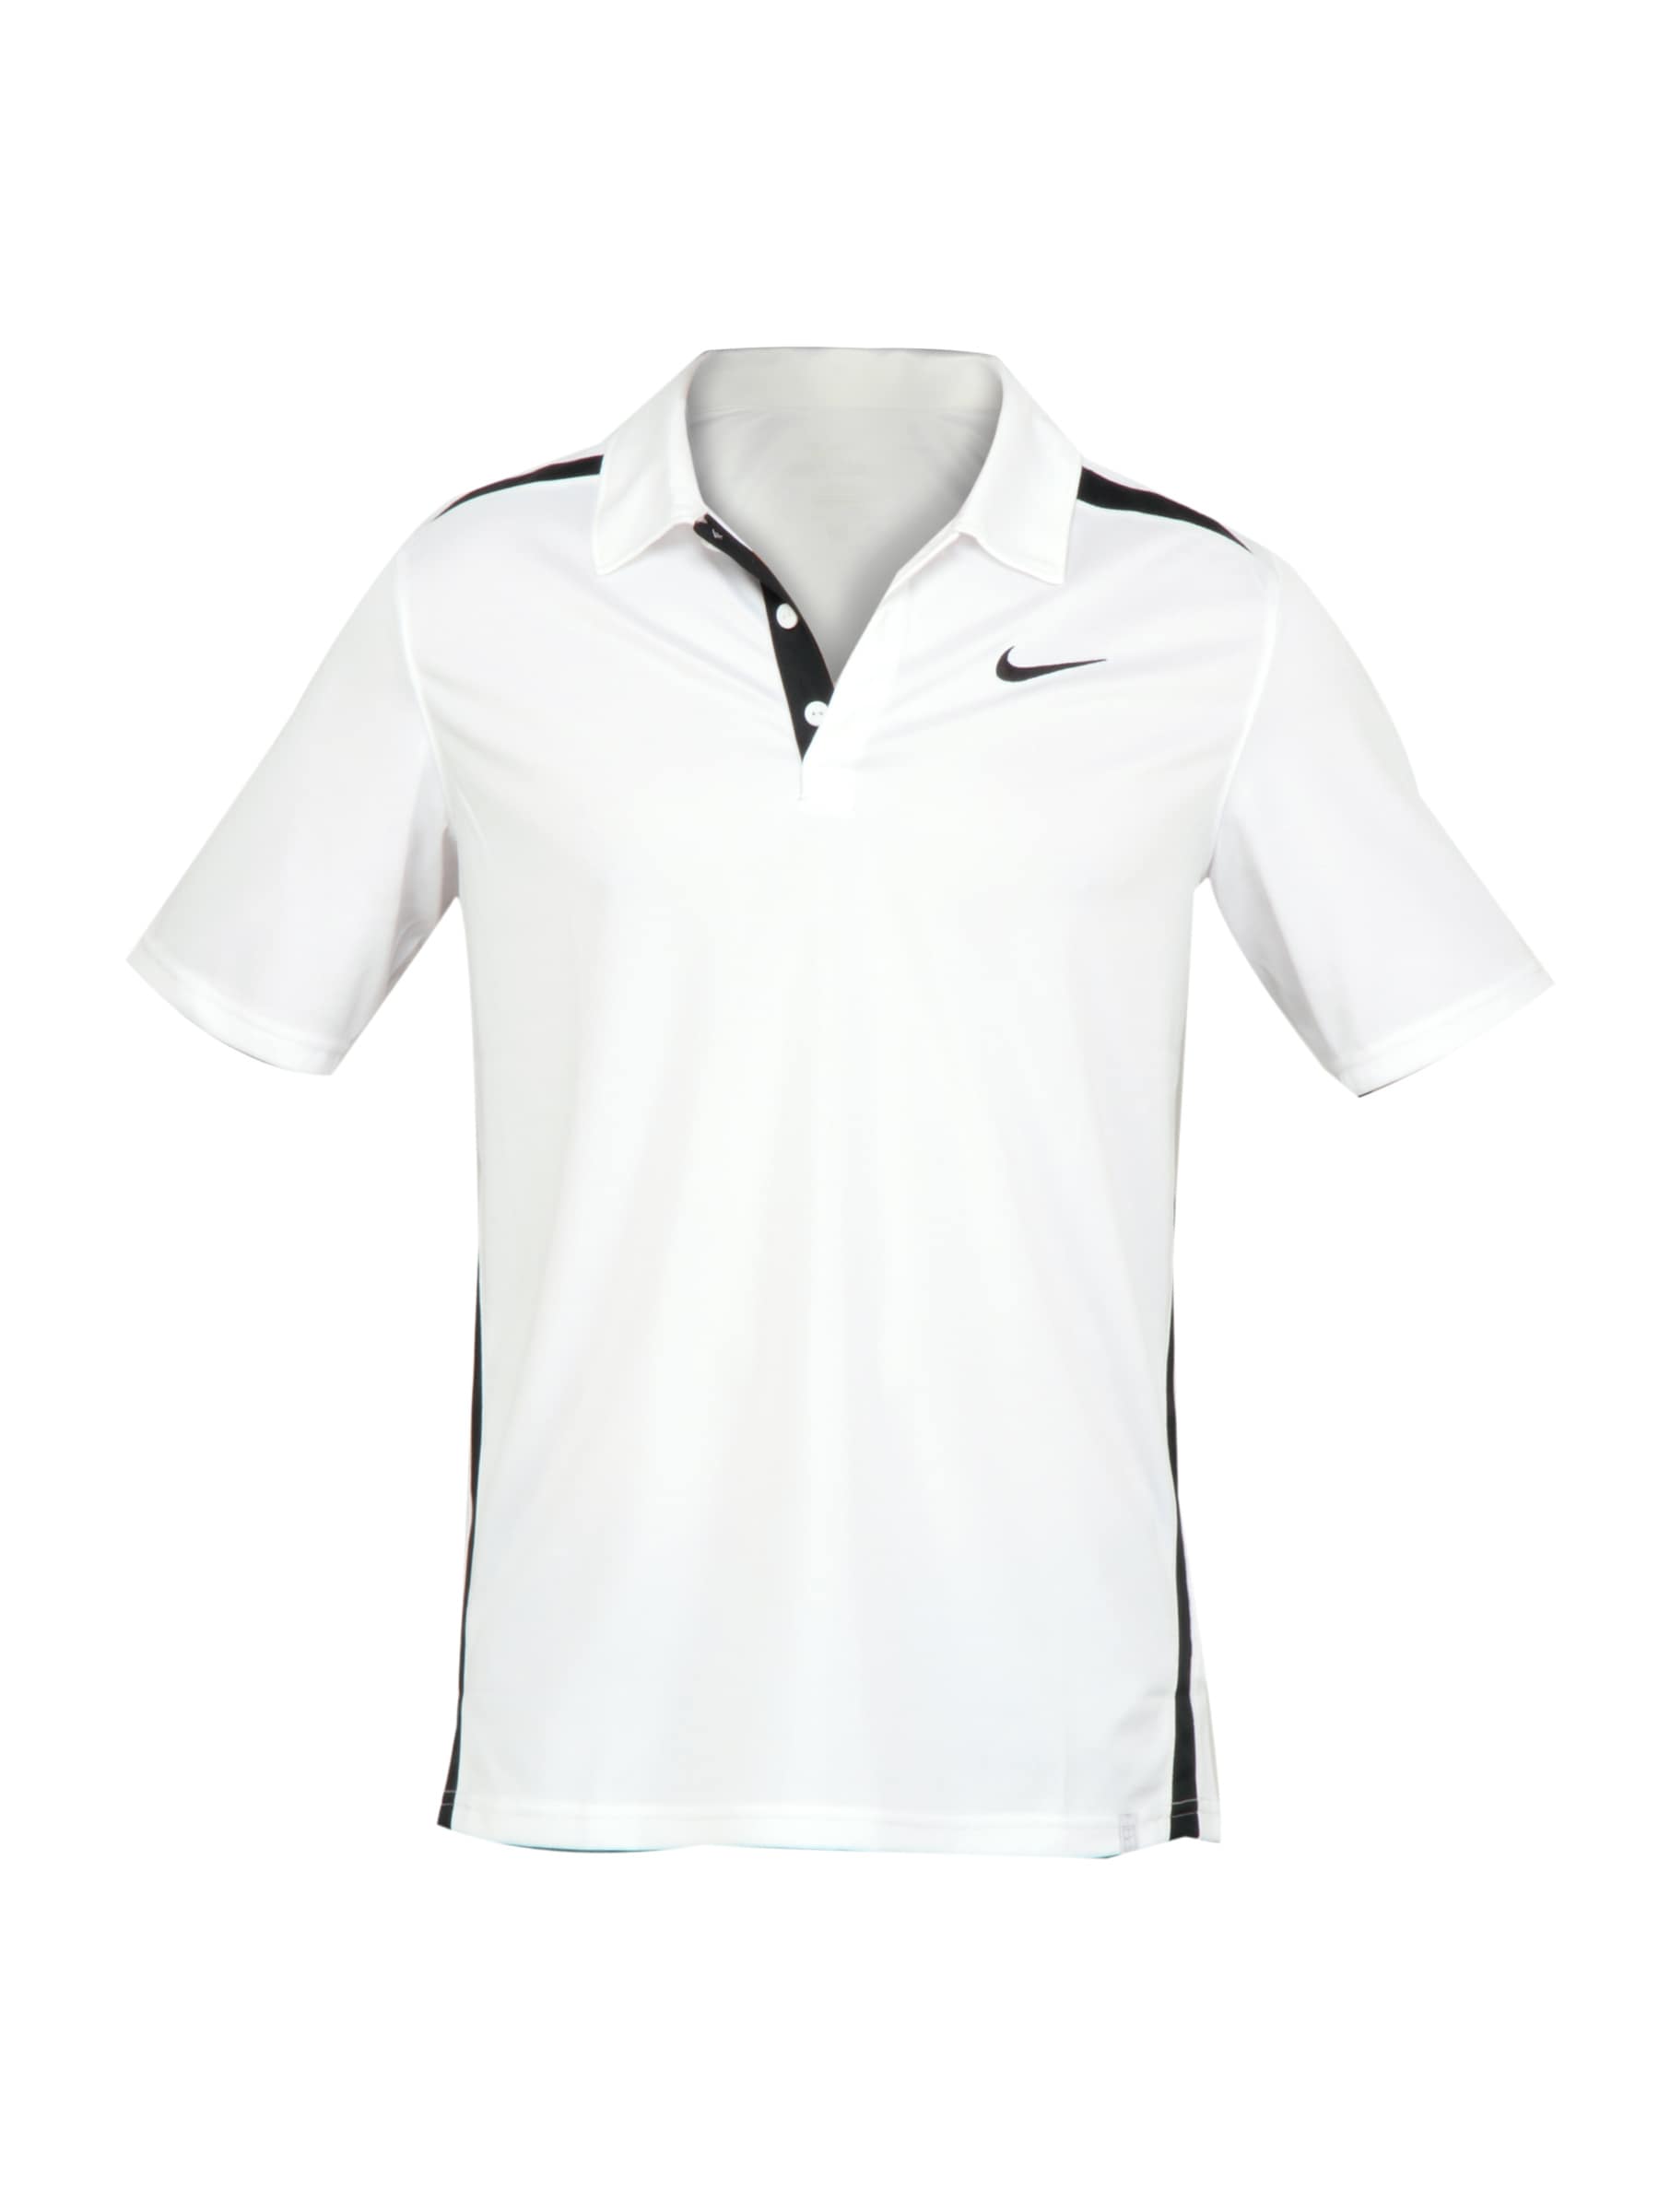 Nike Men White T-shirt